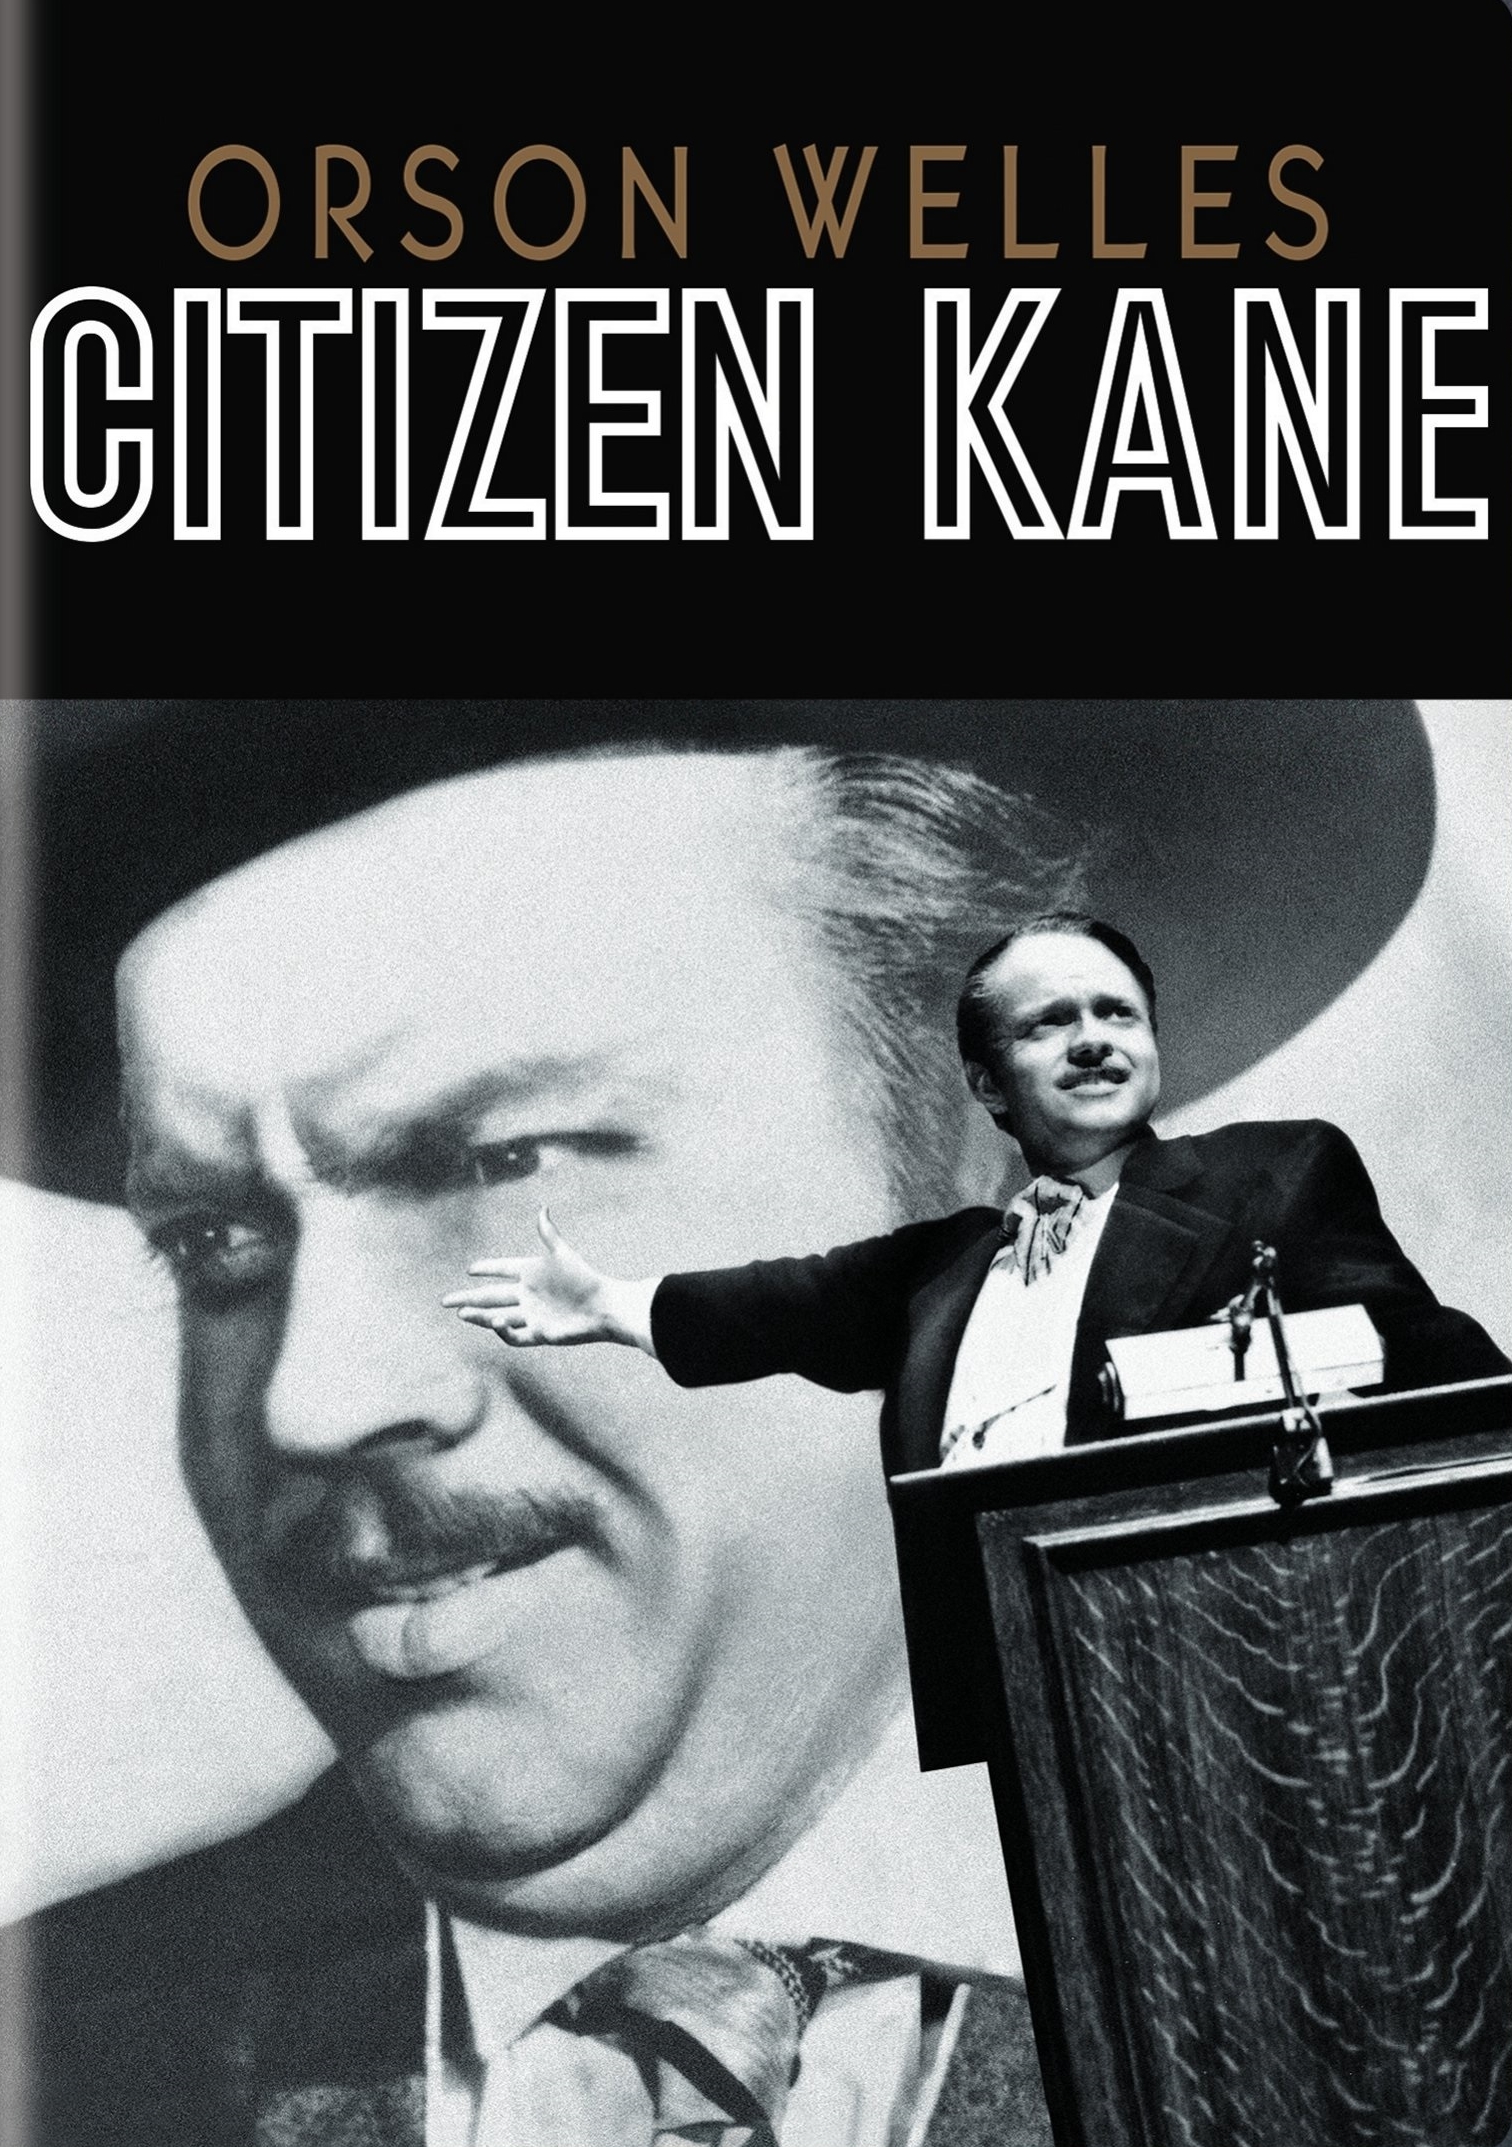 Citizen Kane [75th Anniversary] [DVD] [1941] - Best Buy